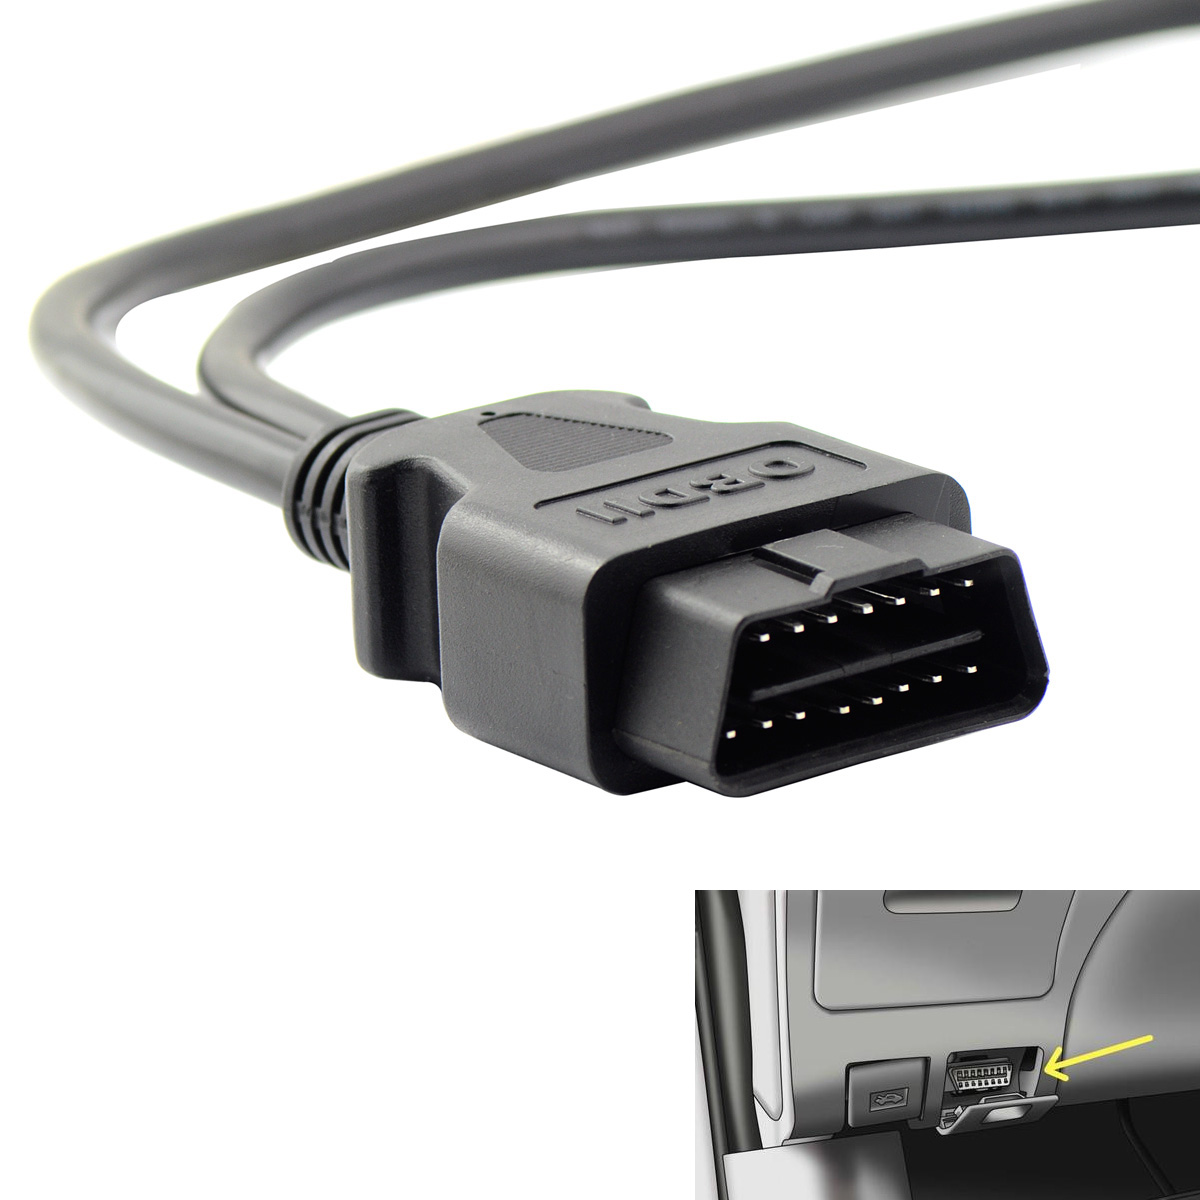 16pin OBDII YSplitter Cable with Underdash Bracket for KIA Mazda